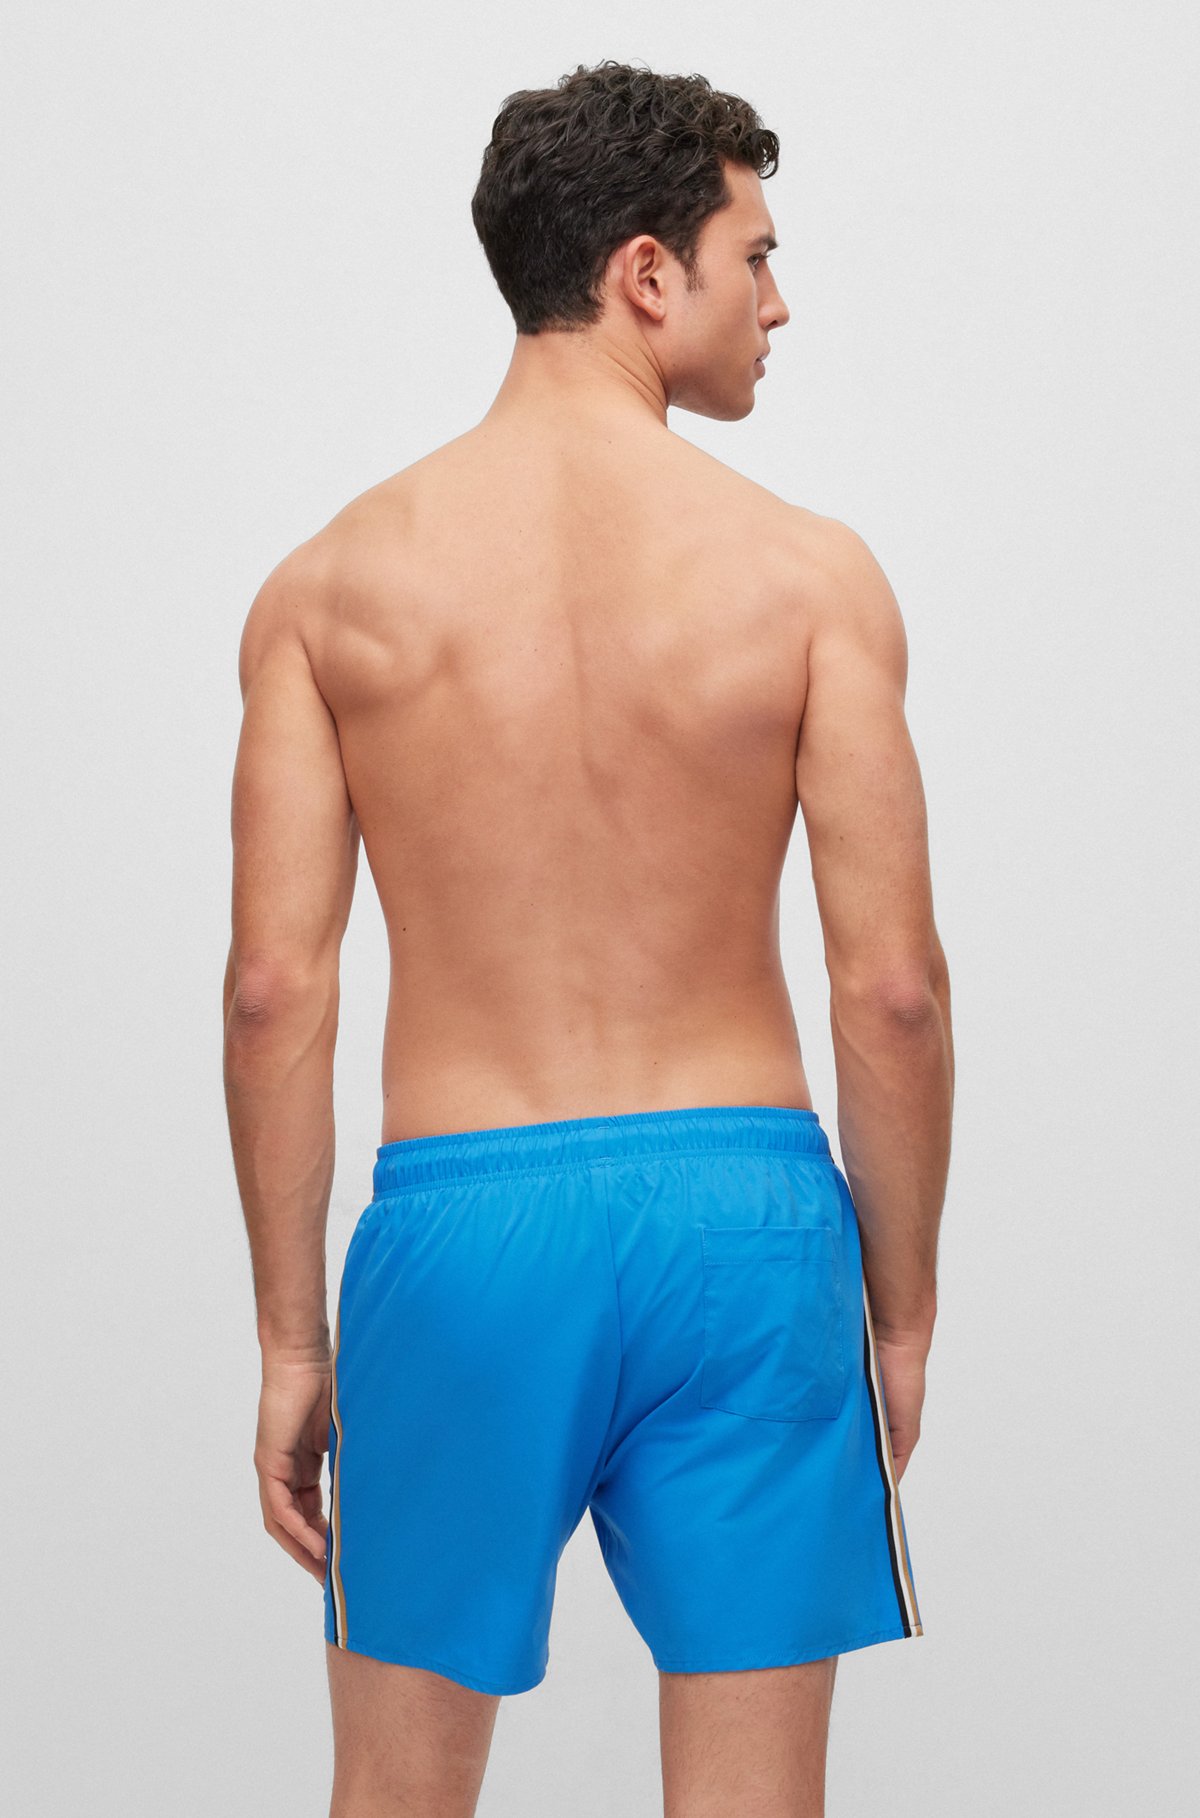 Swim shorts with signature stripe and logo, Blue